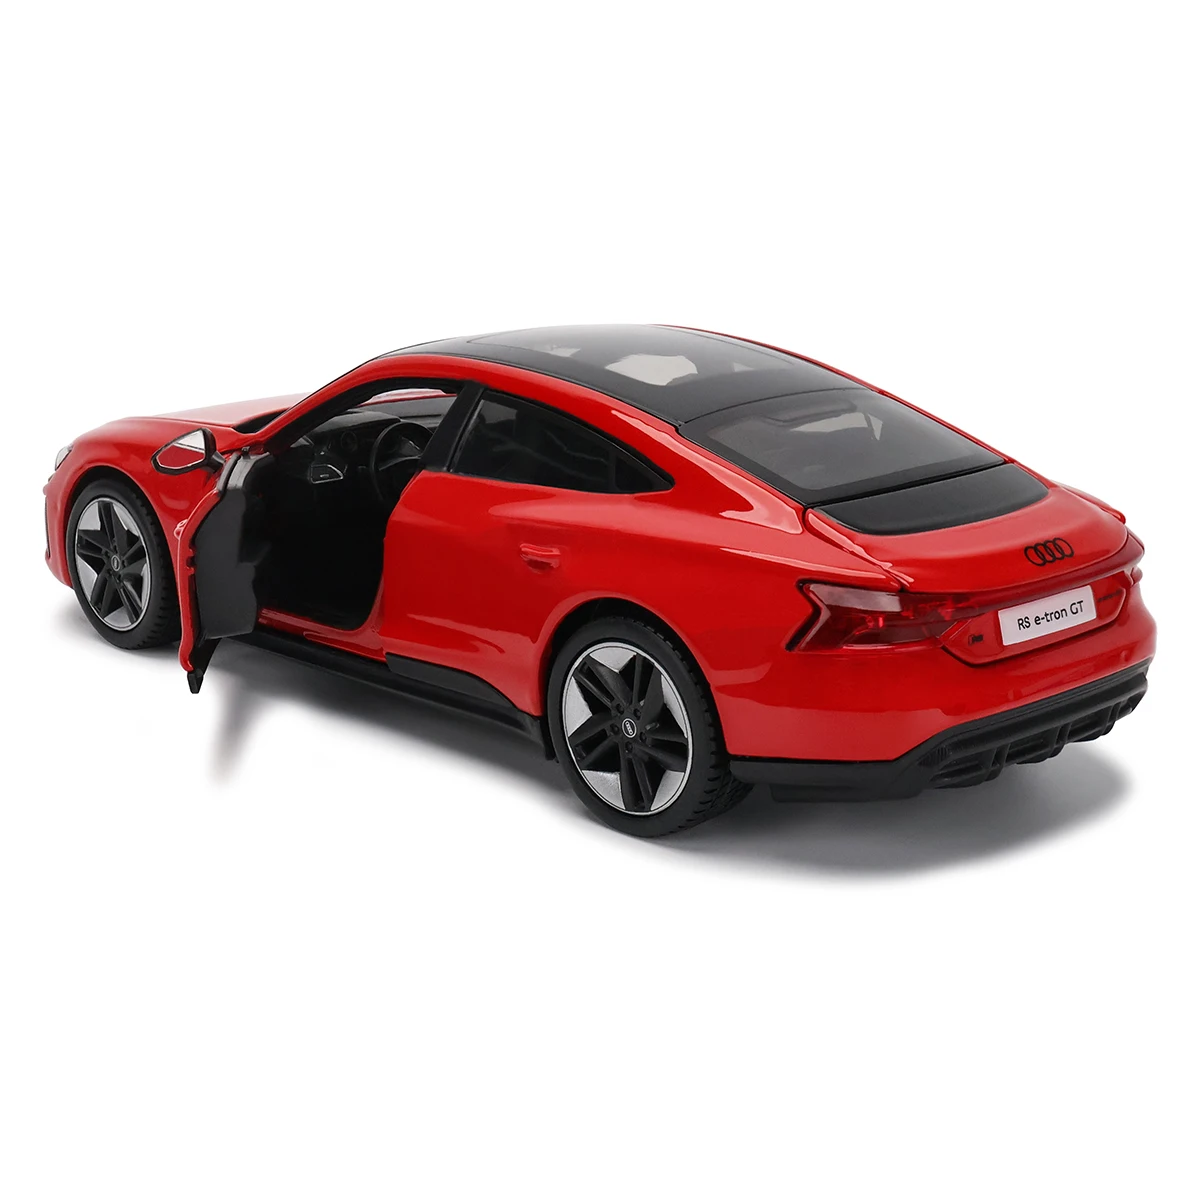 Miniatura 1:24 Audi RS e-tron GT Maisto